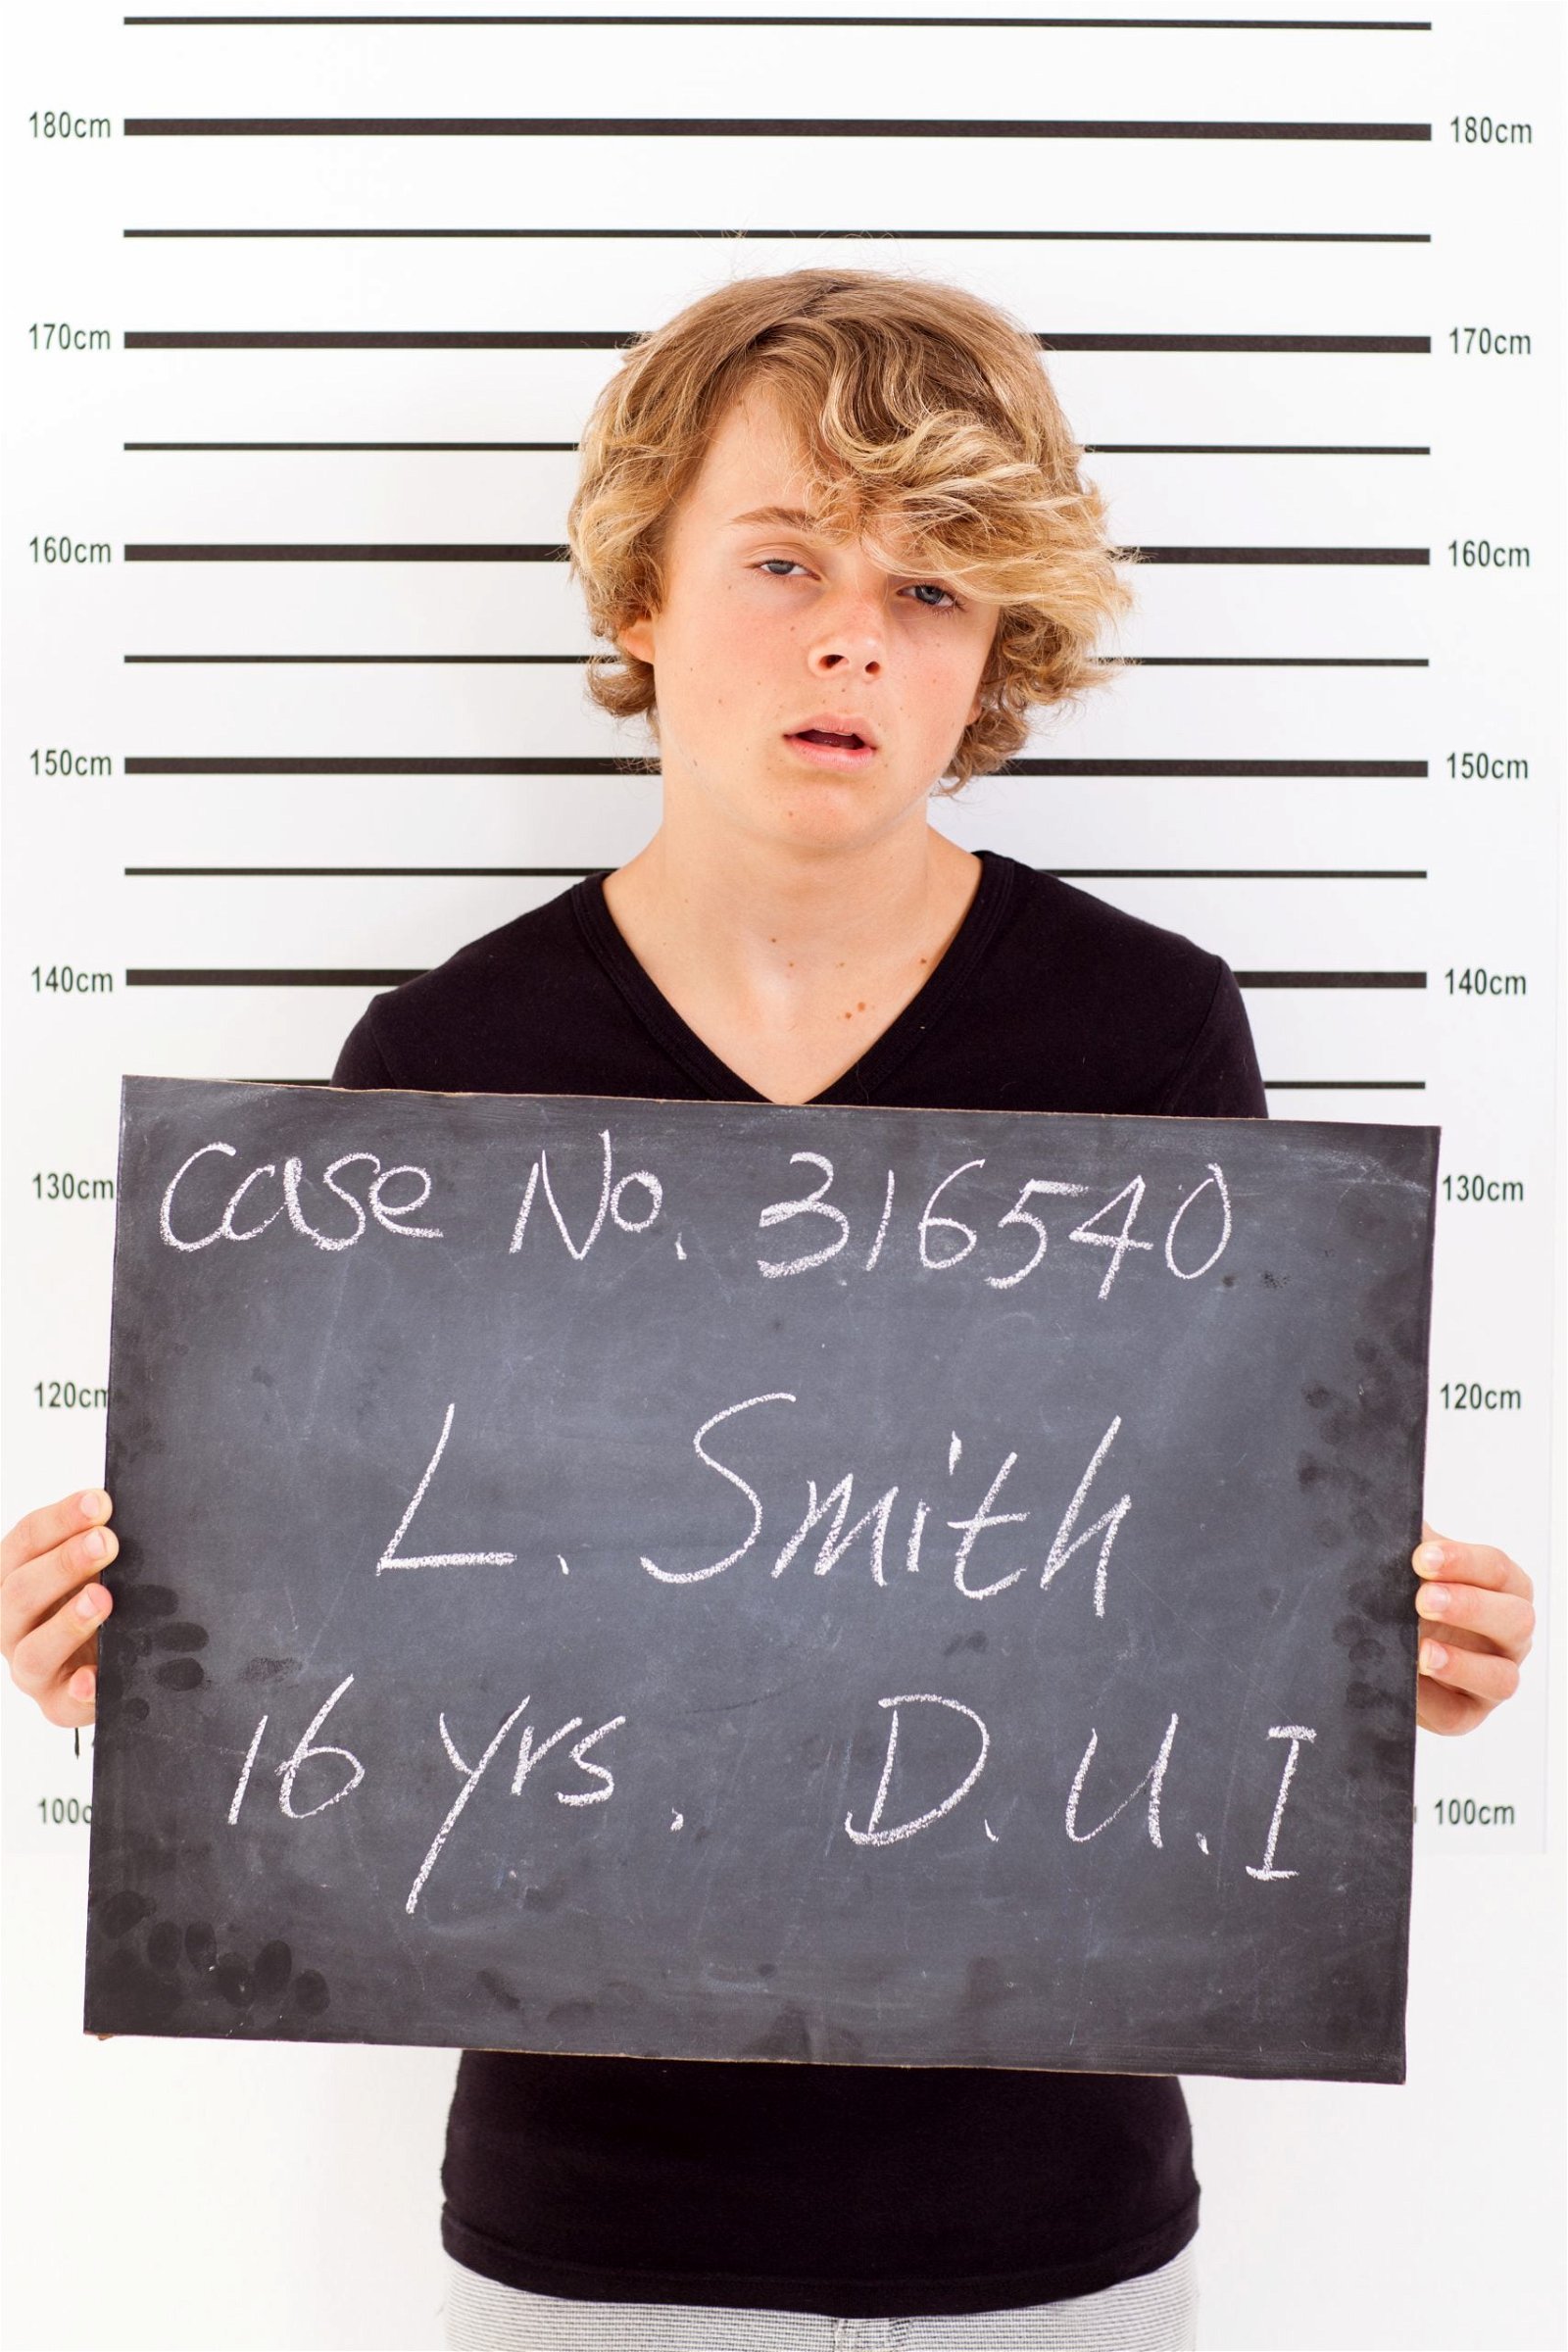 teen boy get arrested for drunk driving and taking police mug shot